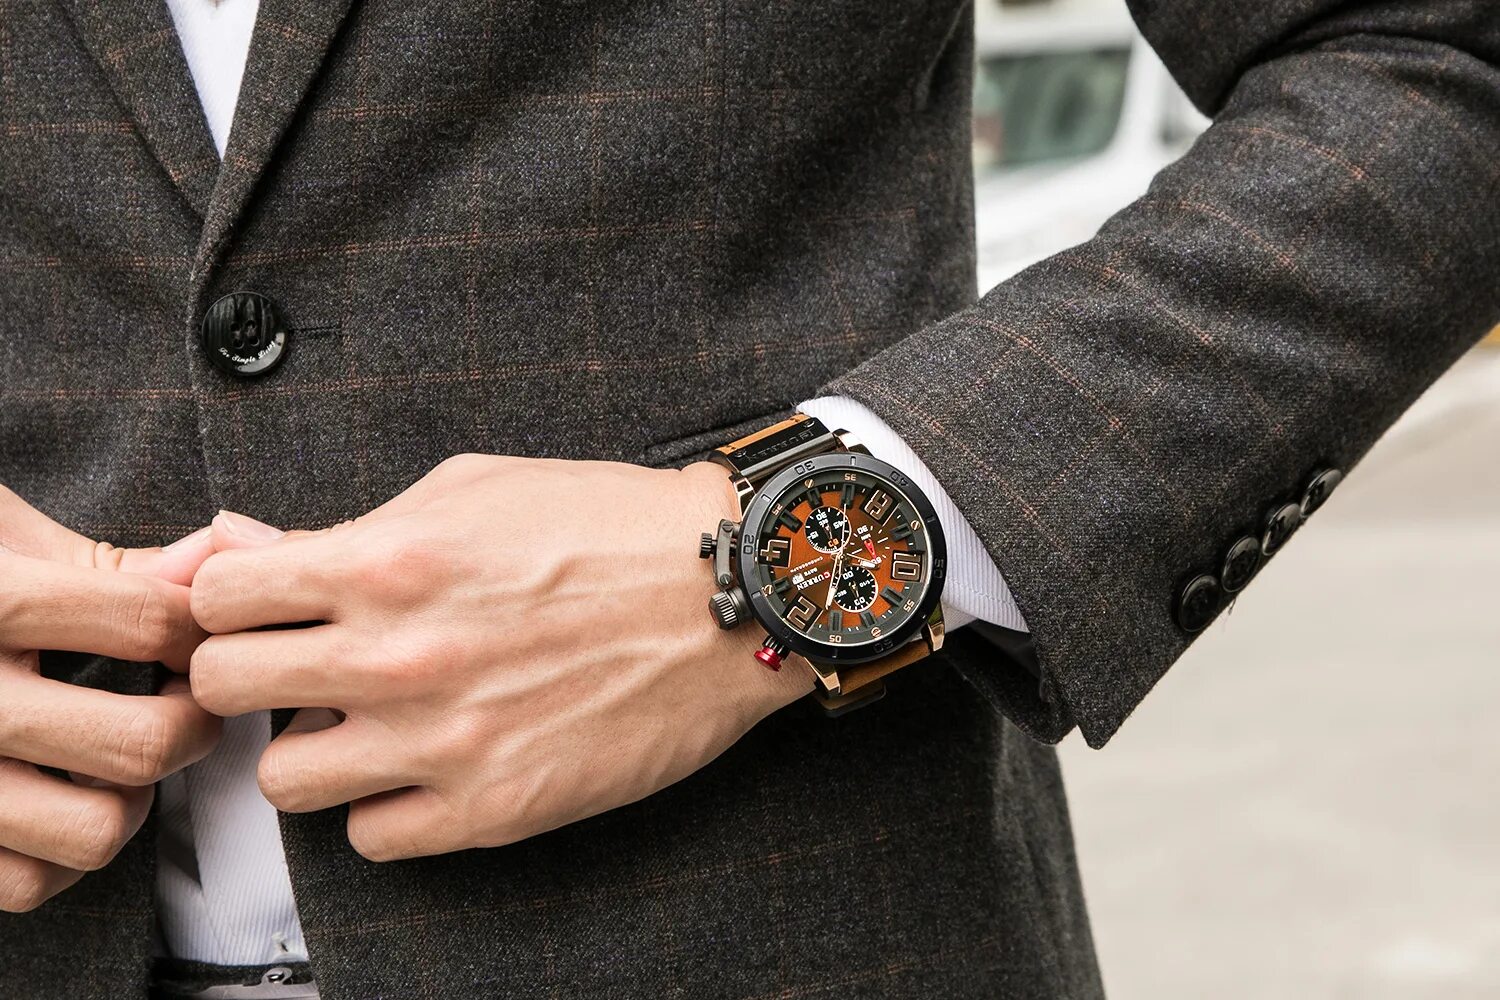 Как правильно надевать часы. Часы мужские. Мужские часы на руке. Часы наручные мужские на руке. Красивые мужские часы.